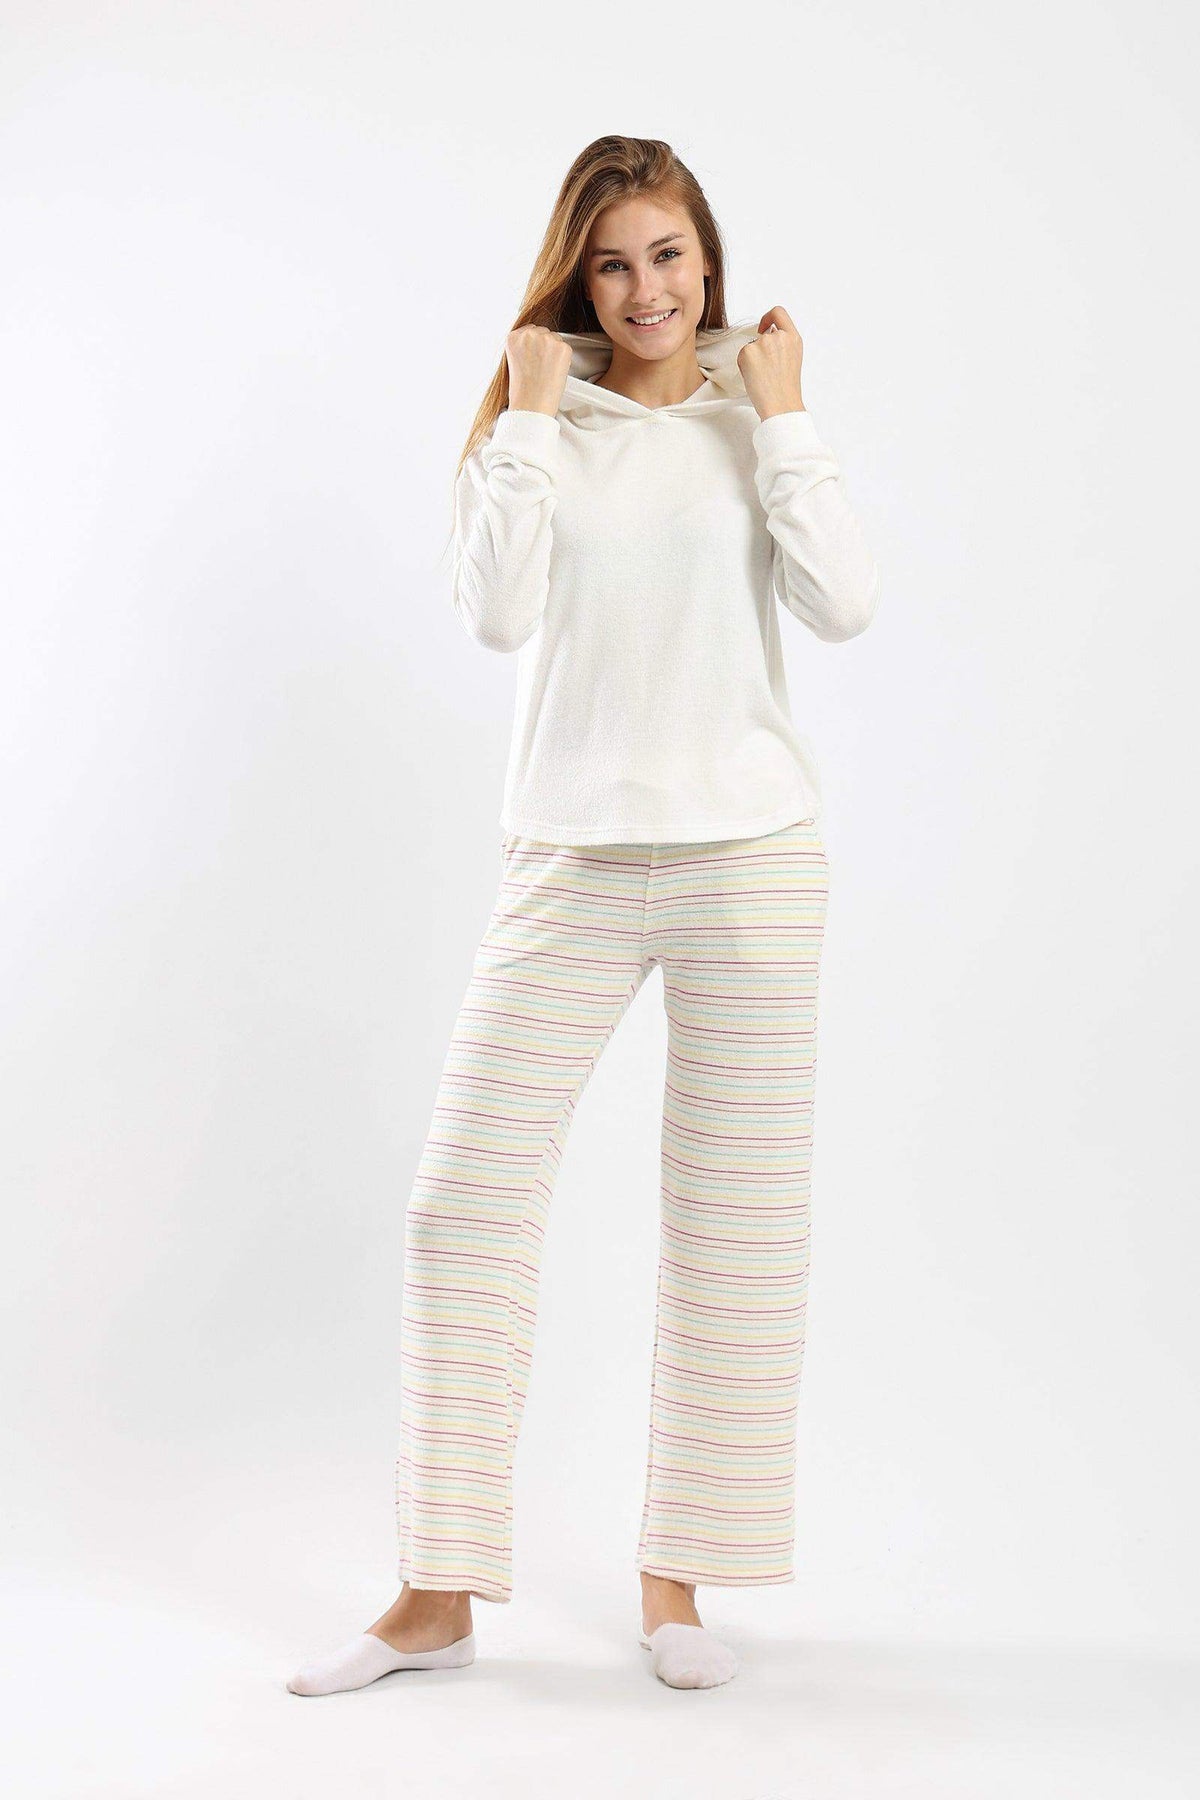 Pyjama Set with Striped Pants - Carina - كارينا